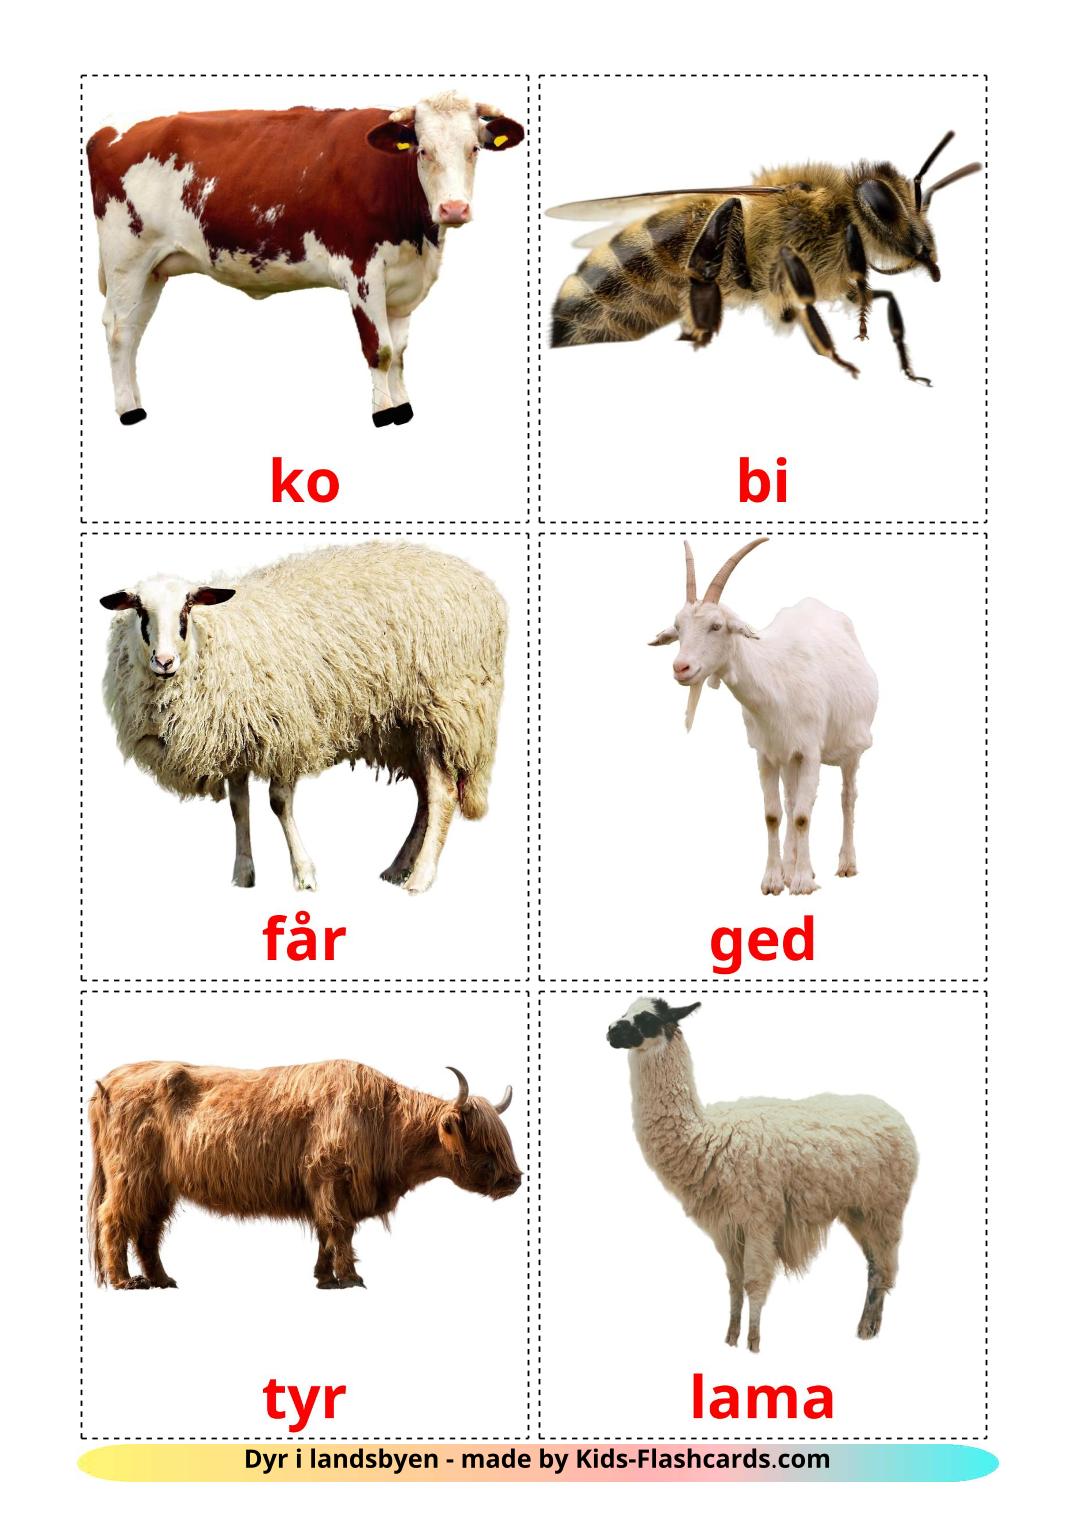 Farm animals - 15 Free Printable dansk Flashcards 